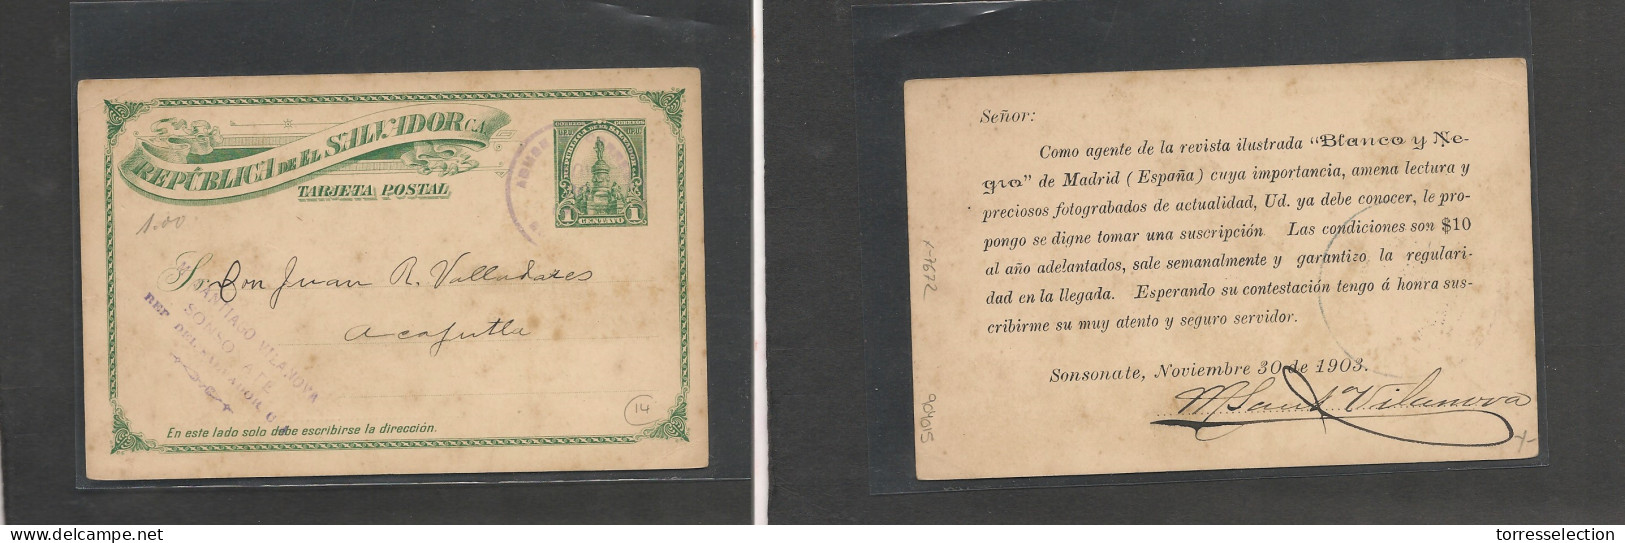 SALVADOR, EL. Salvador Cover - 1903 Sonsonate To Acatjula 1c Green Printed Stat Cardprivate Message Scarce So XSALE. - Salvador